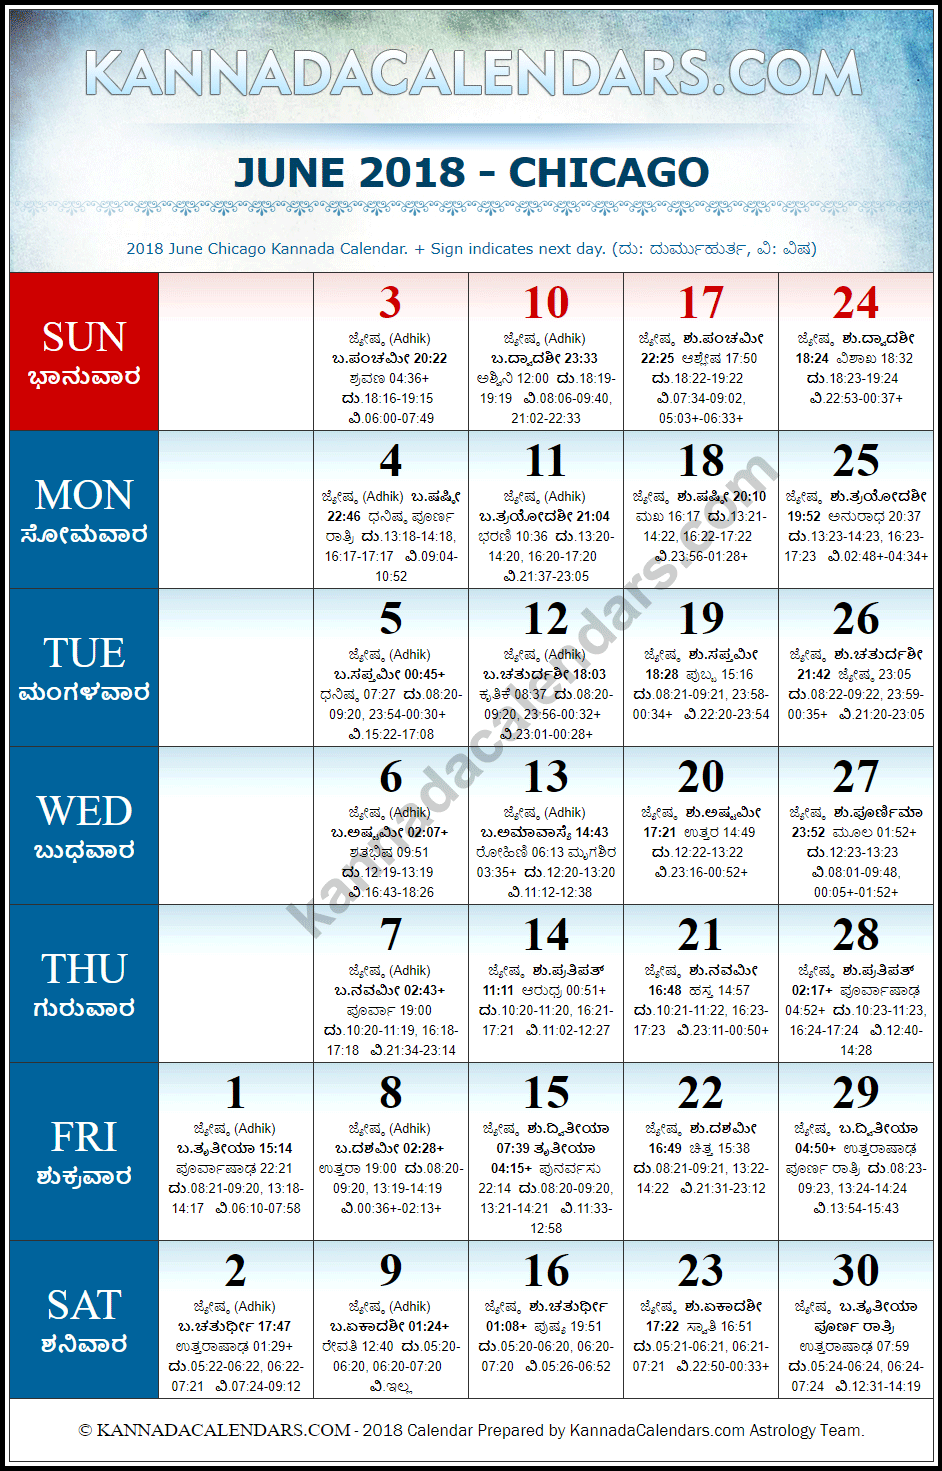 June 2018 Kannada Calendar for Chicago, USA